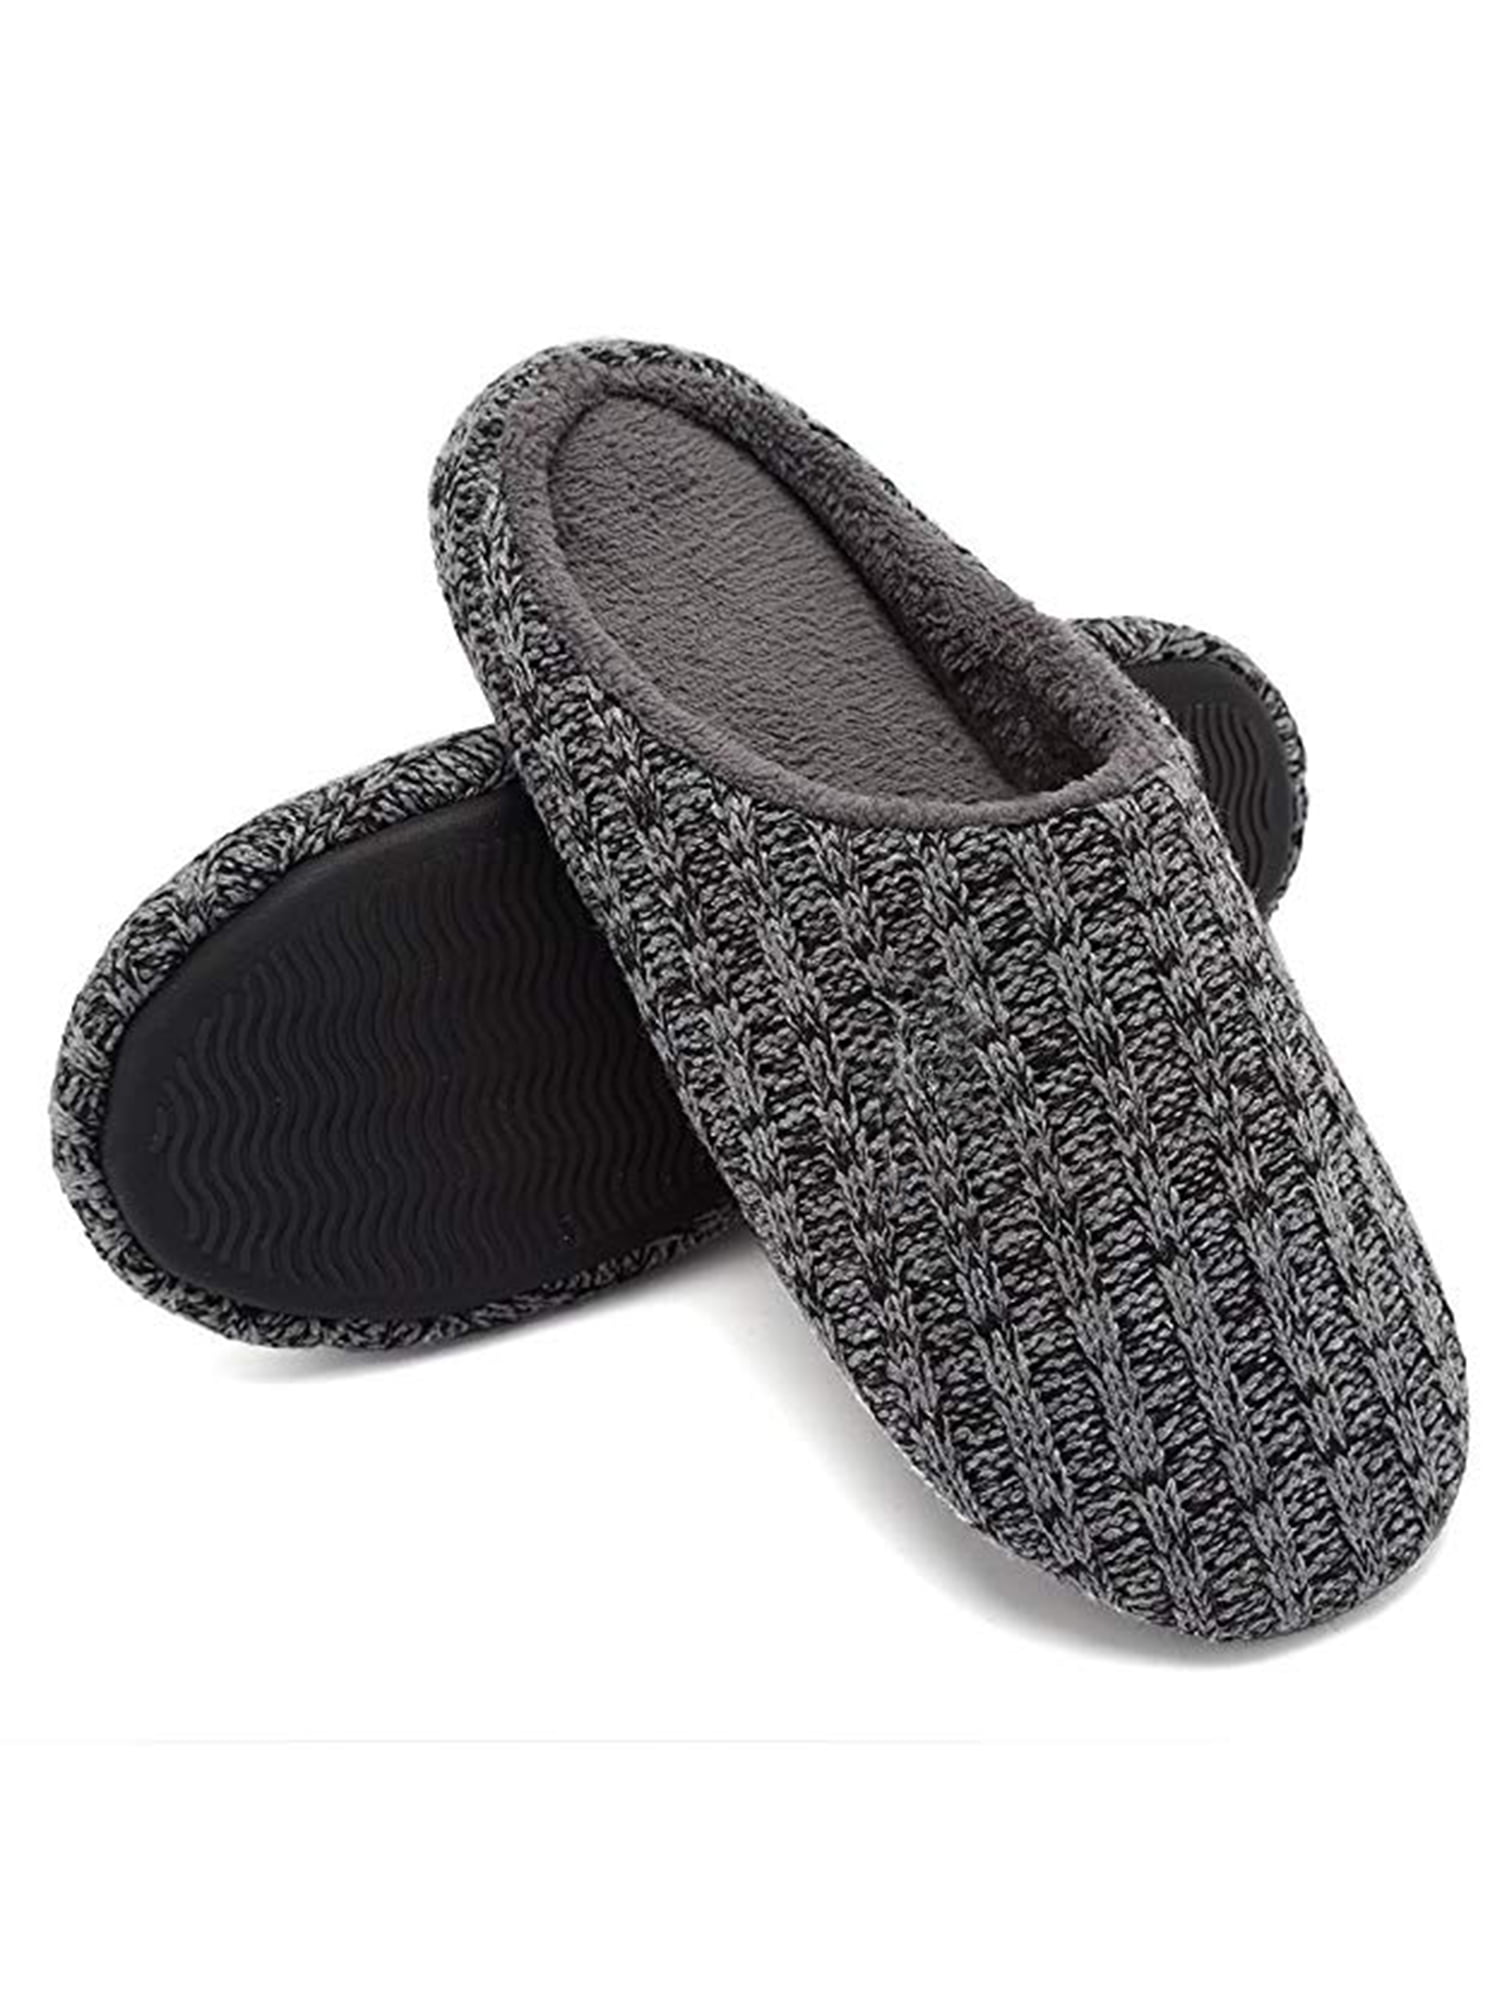 unisex house slippers